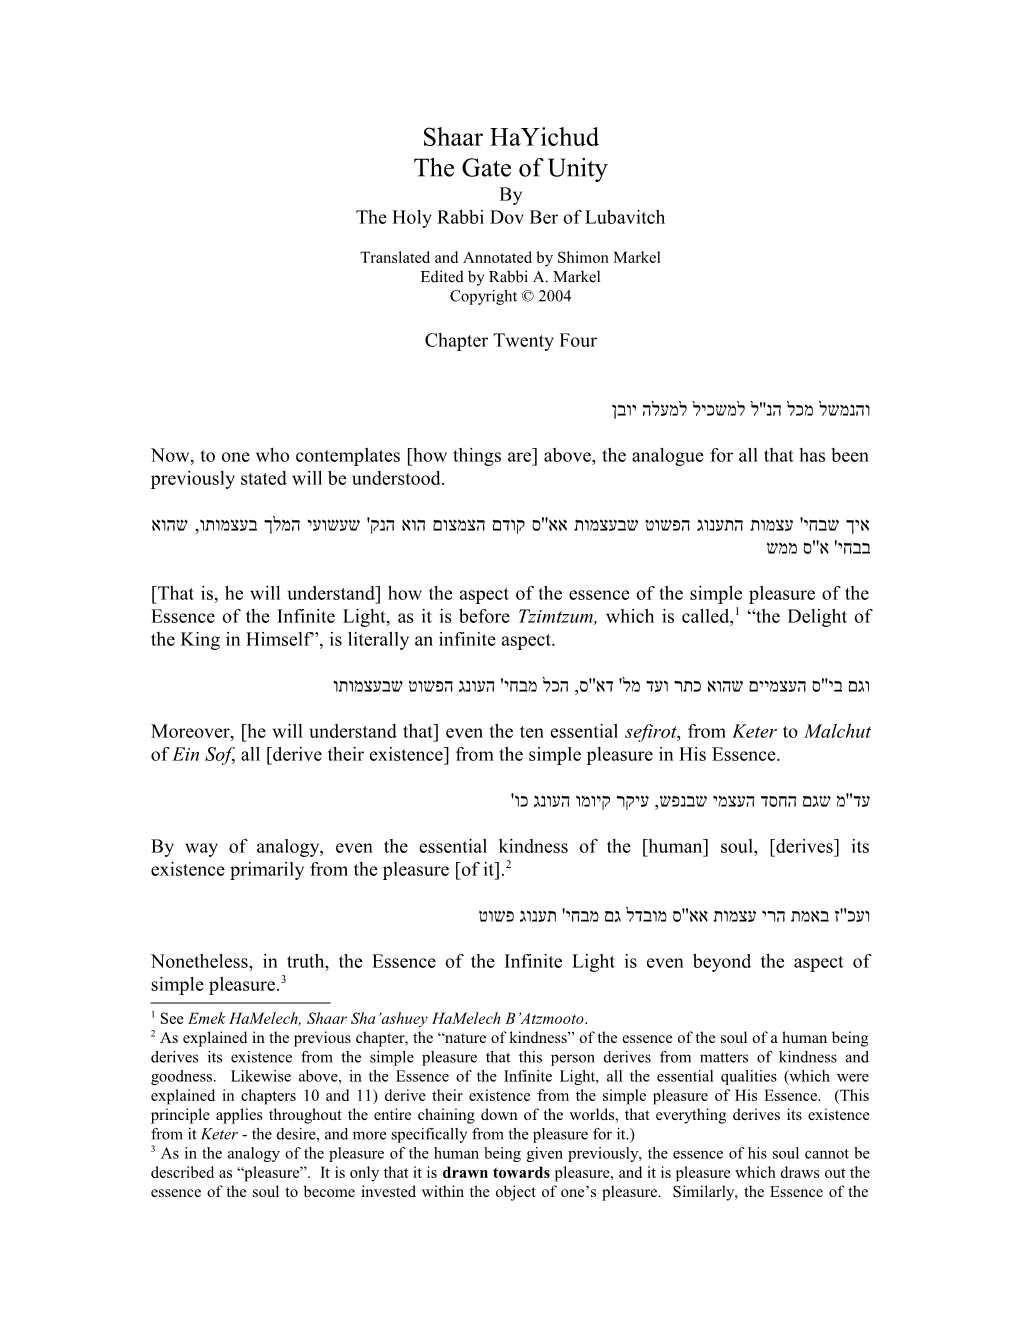 The Holy Rabbi Dov Ber of Lubavitch s1